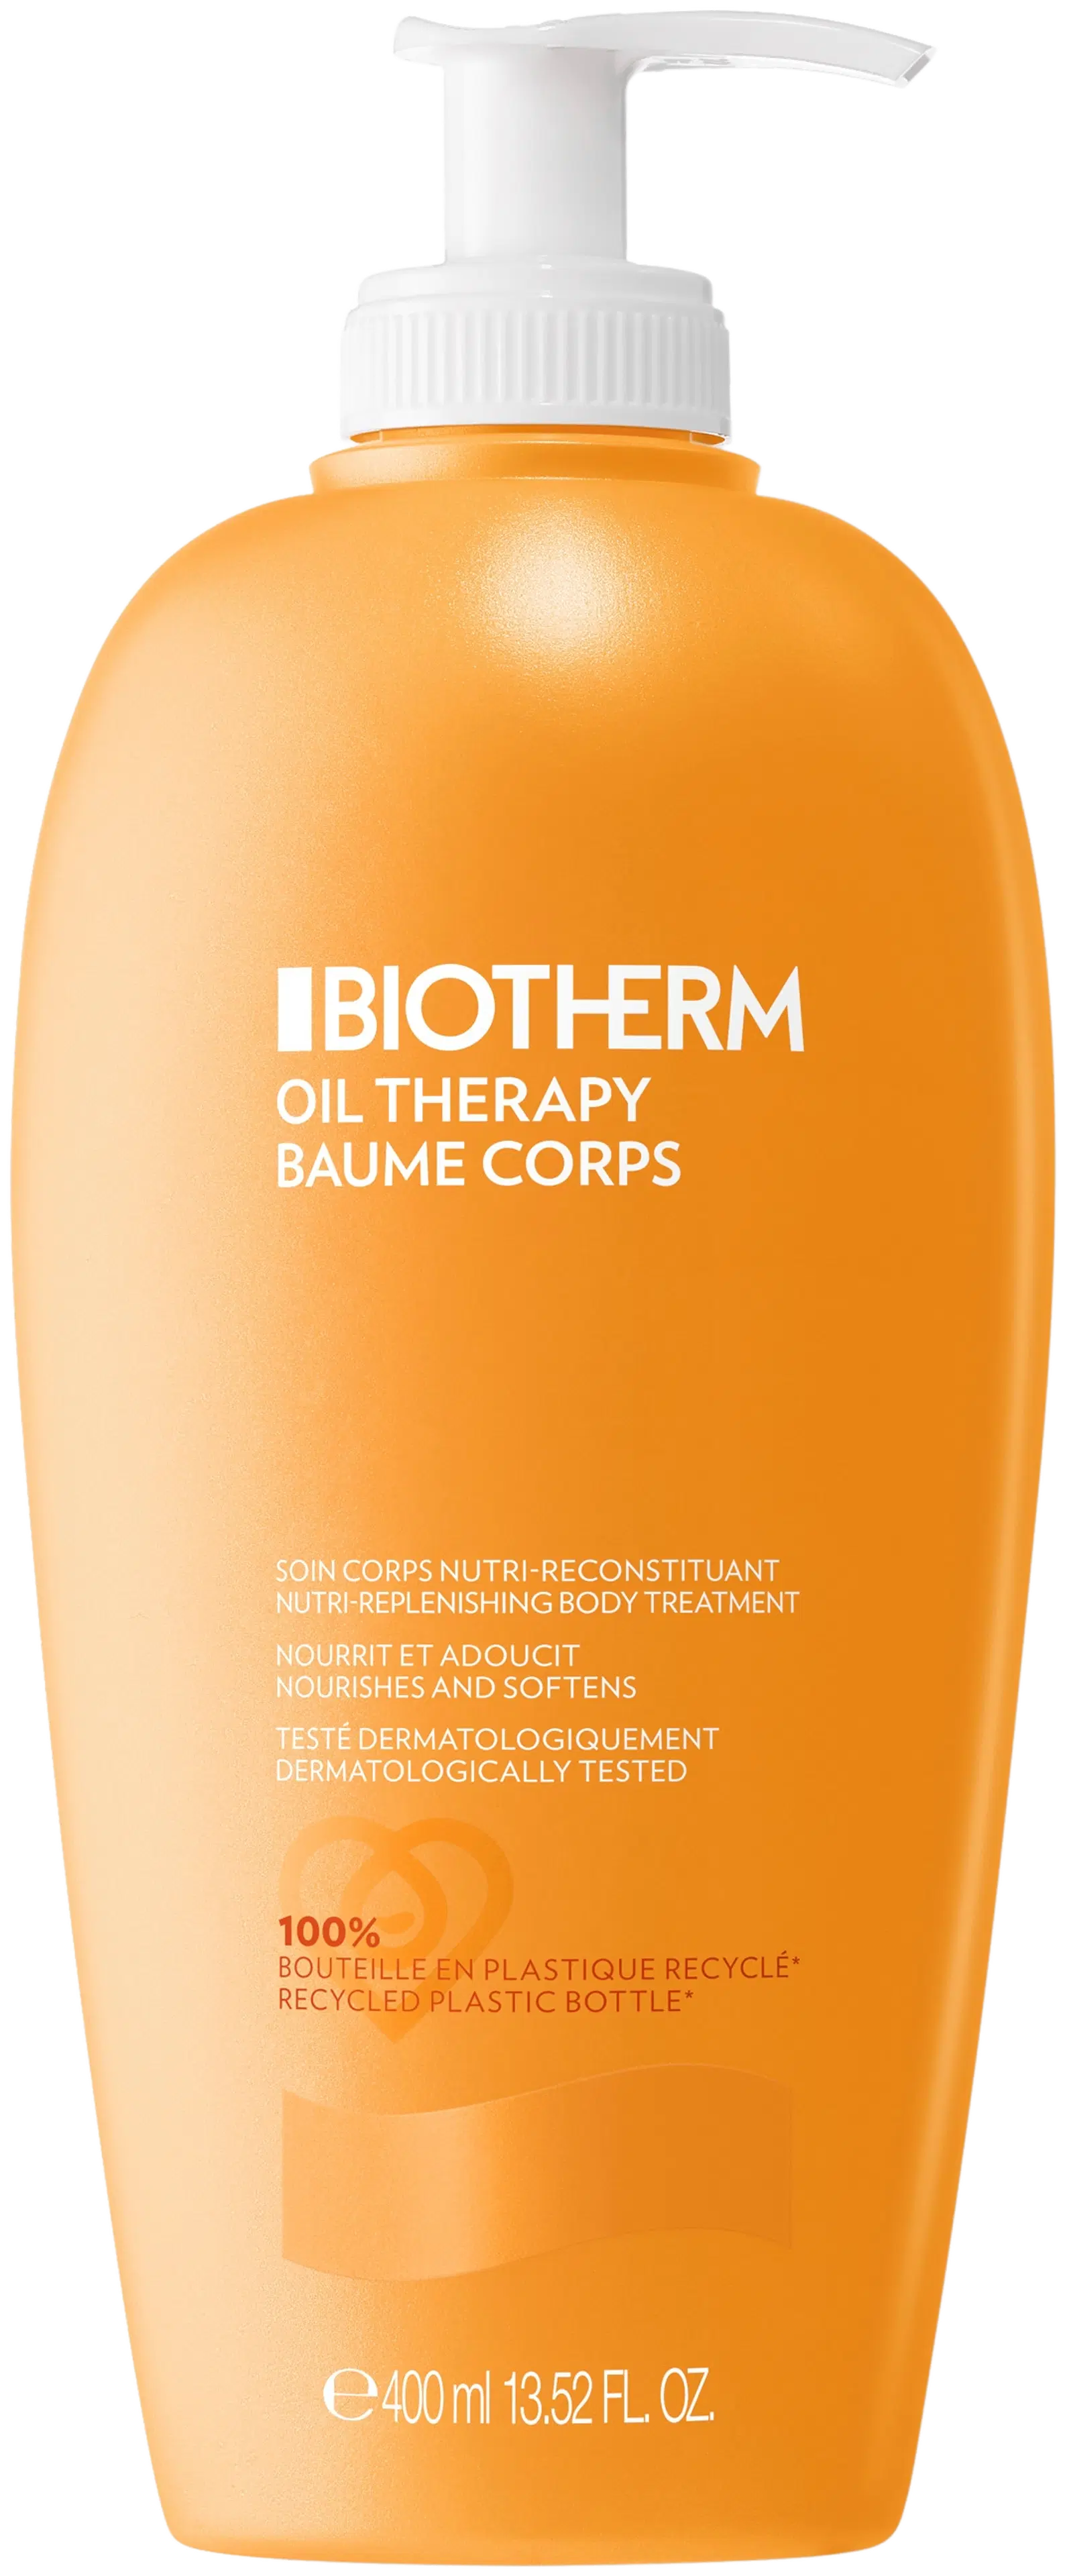 Biotherm Oil Therapy Baume Corps Body Lotion vartaloemulsio 400 ml